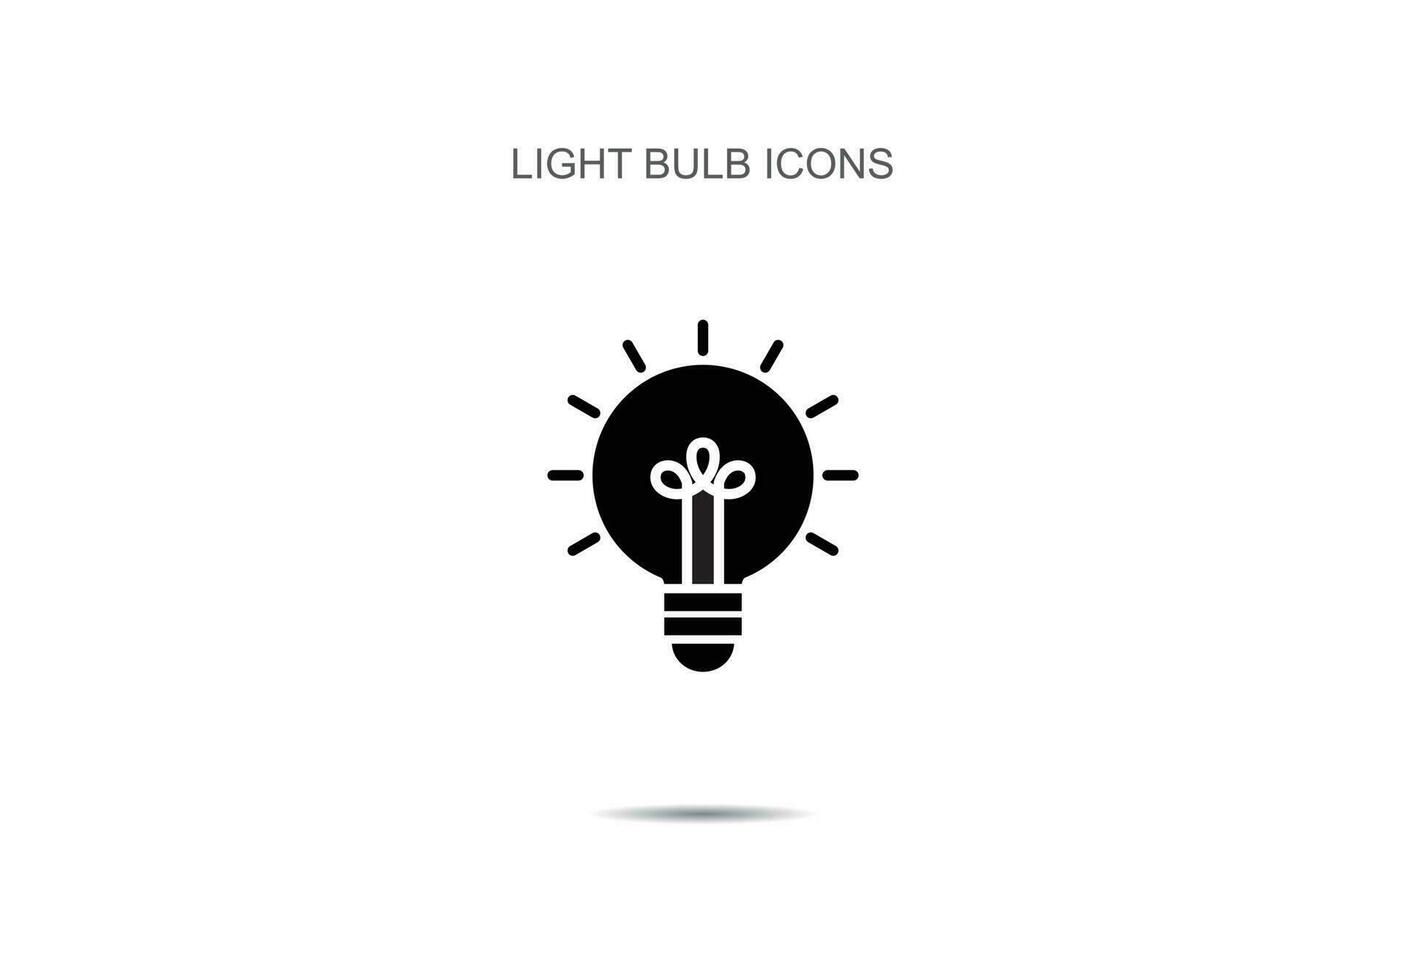 Light bulb icons vector illustration on background